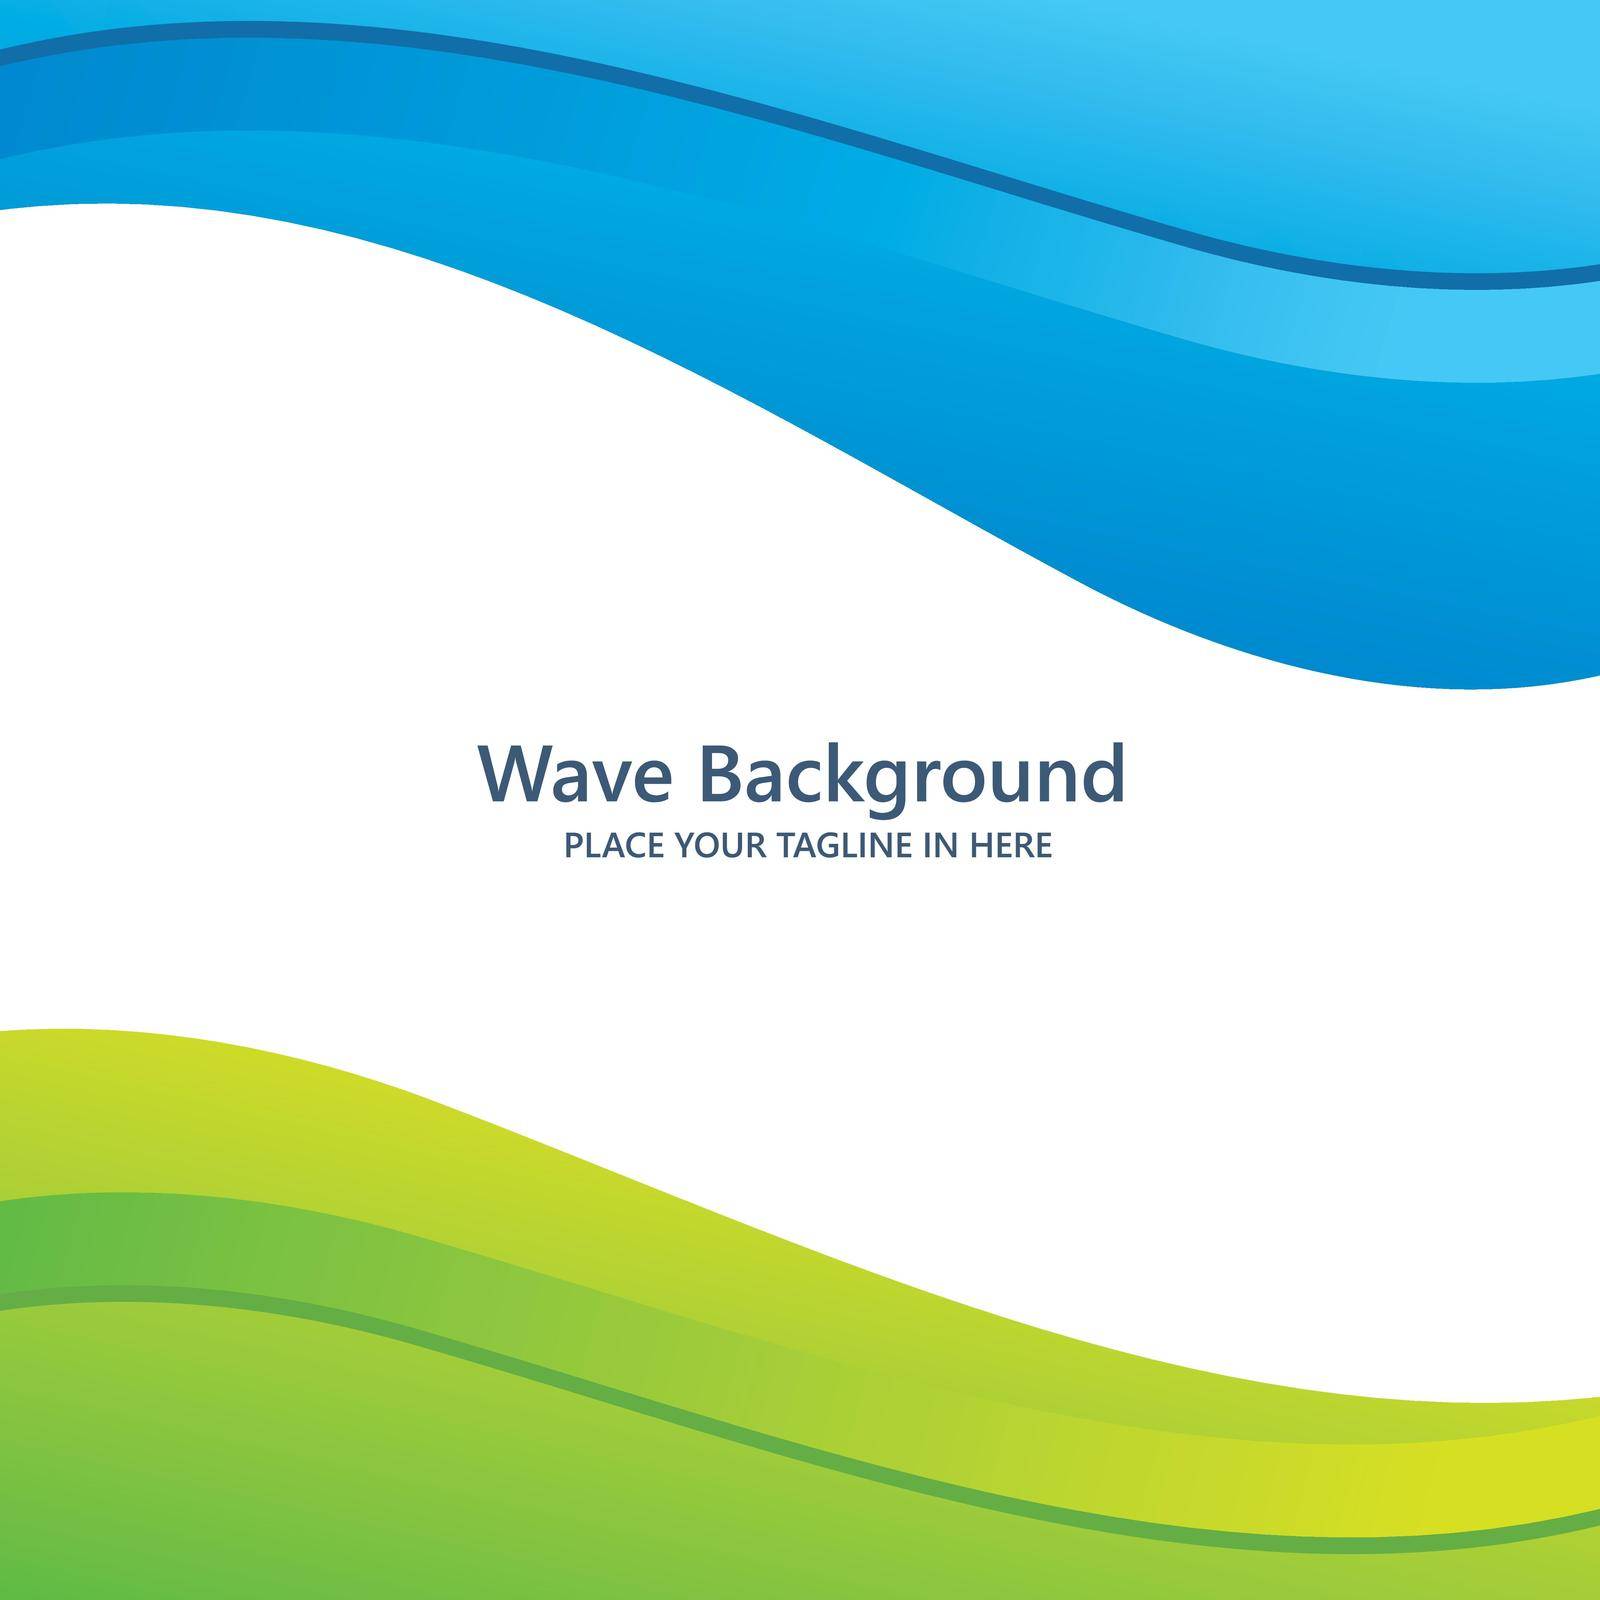 wave background vector illustration design by idan